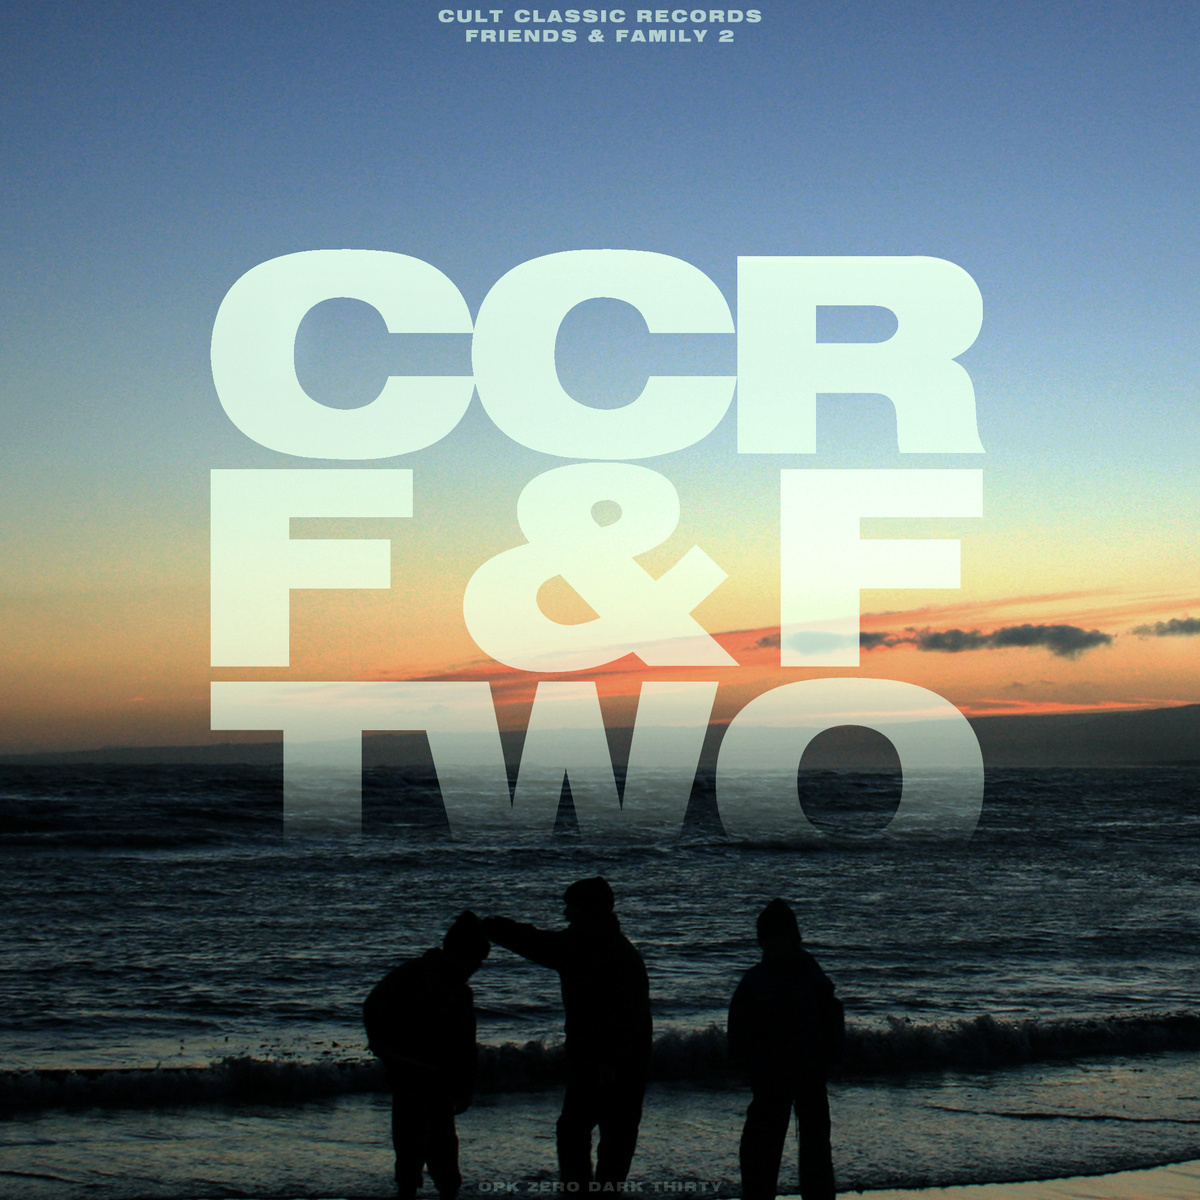 Cult Classic Records "Friends & Family 2" Release | @CultClassicRecs